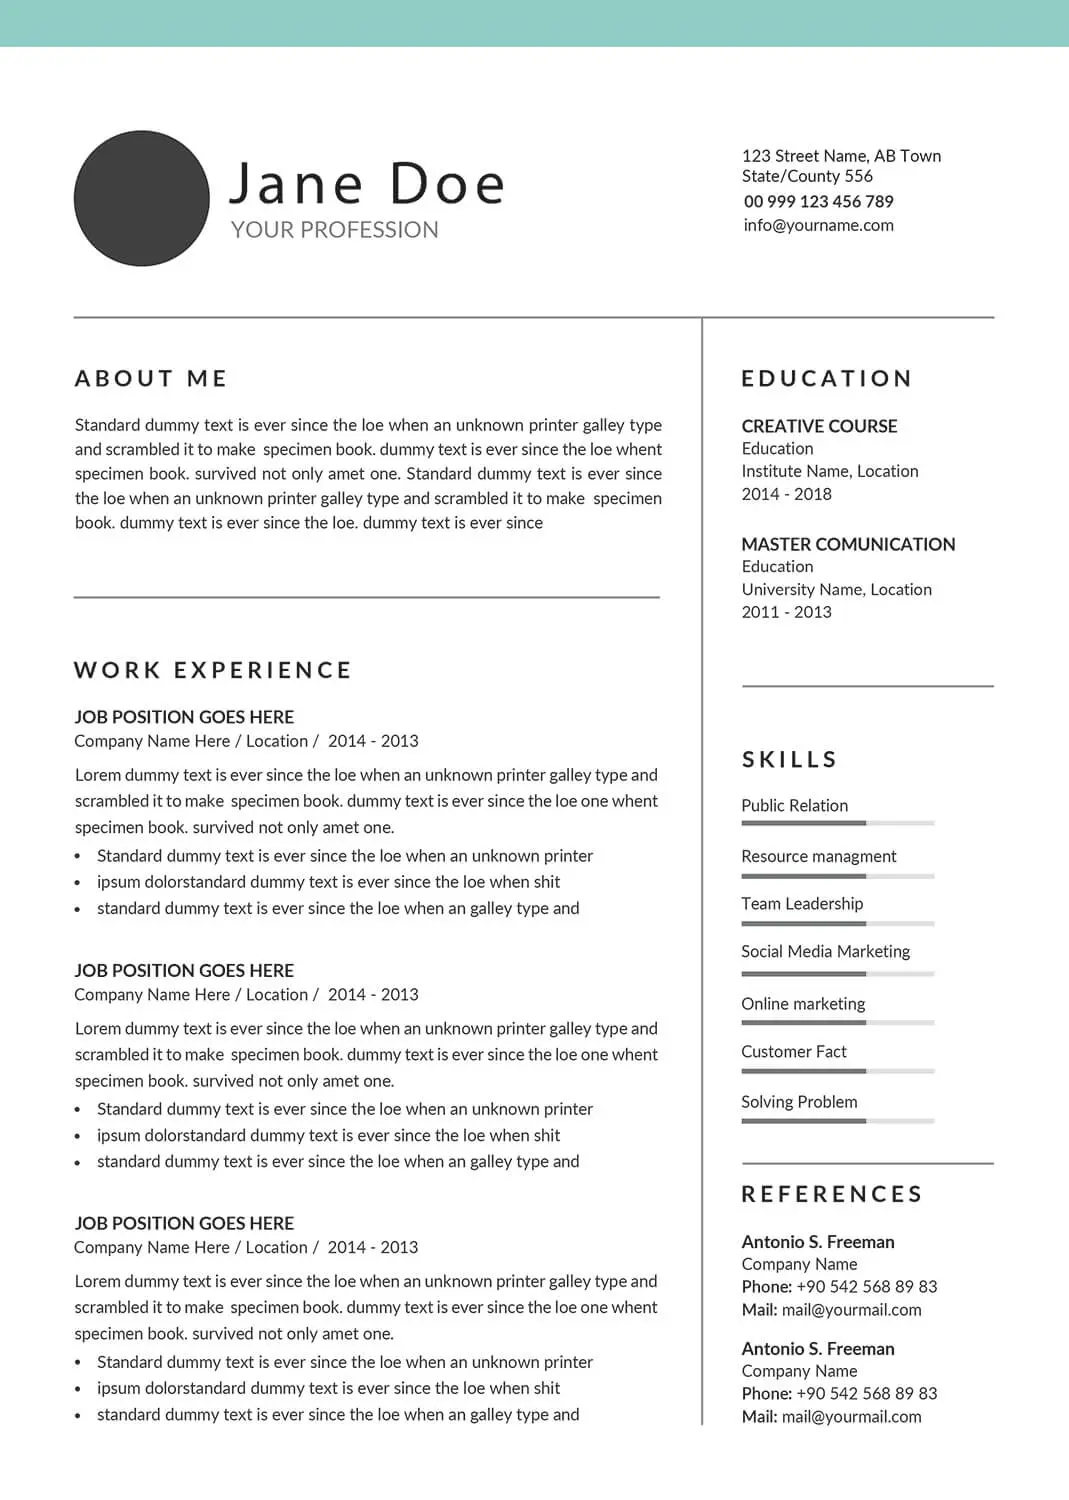 transportation-professional-resume